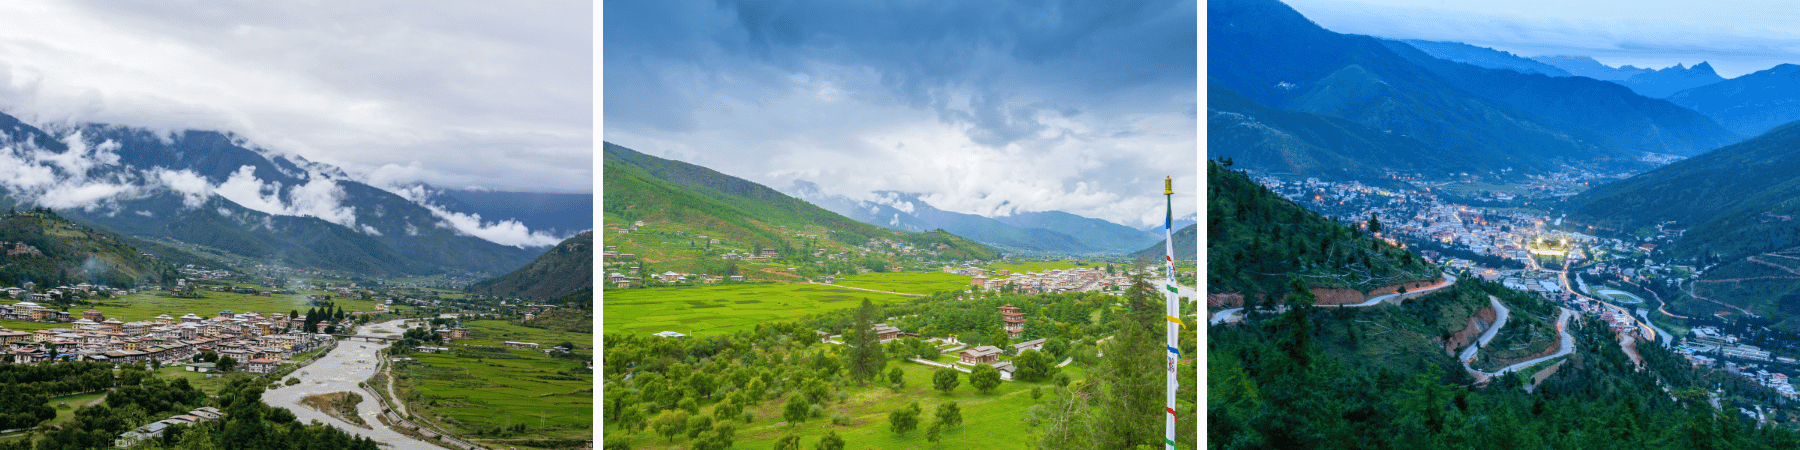 Paro Valley-min